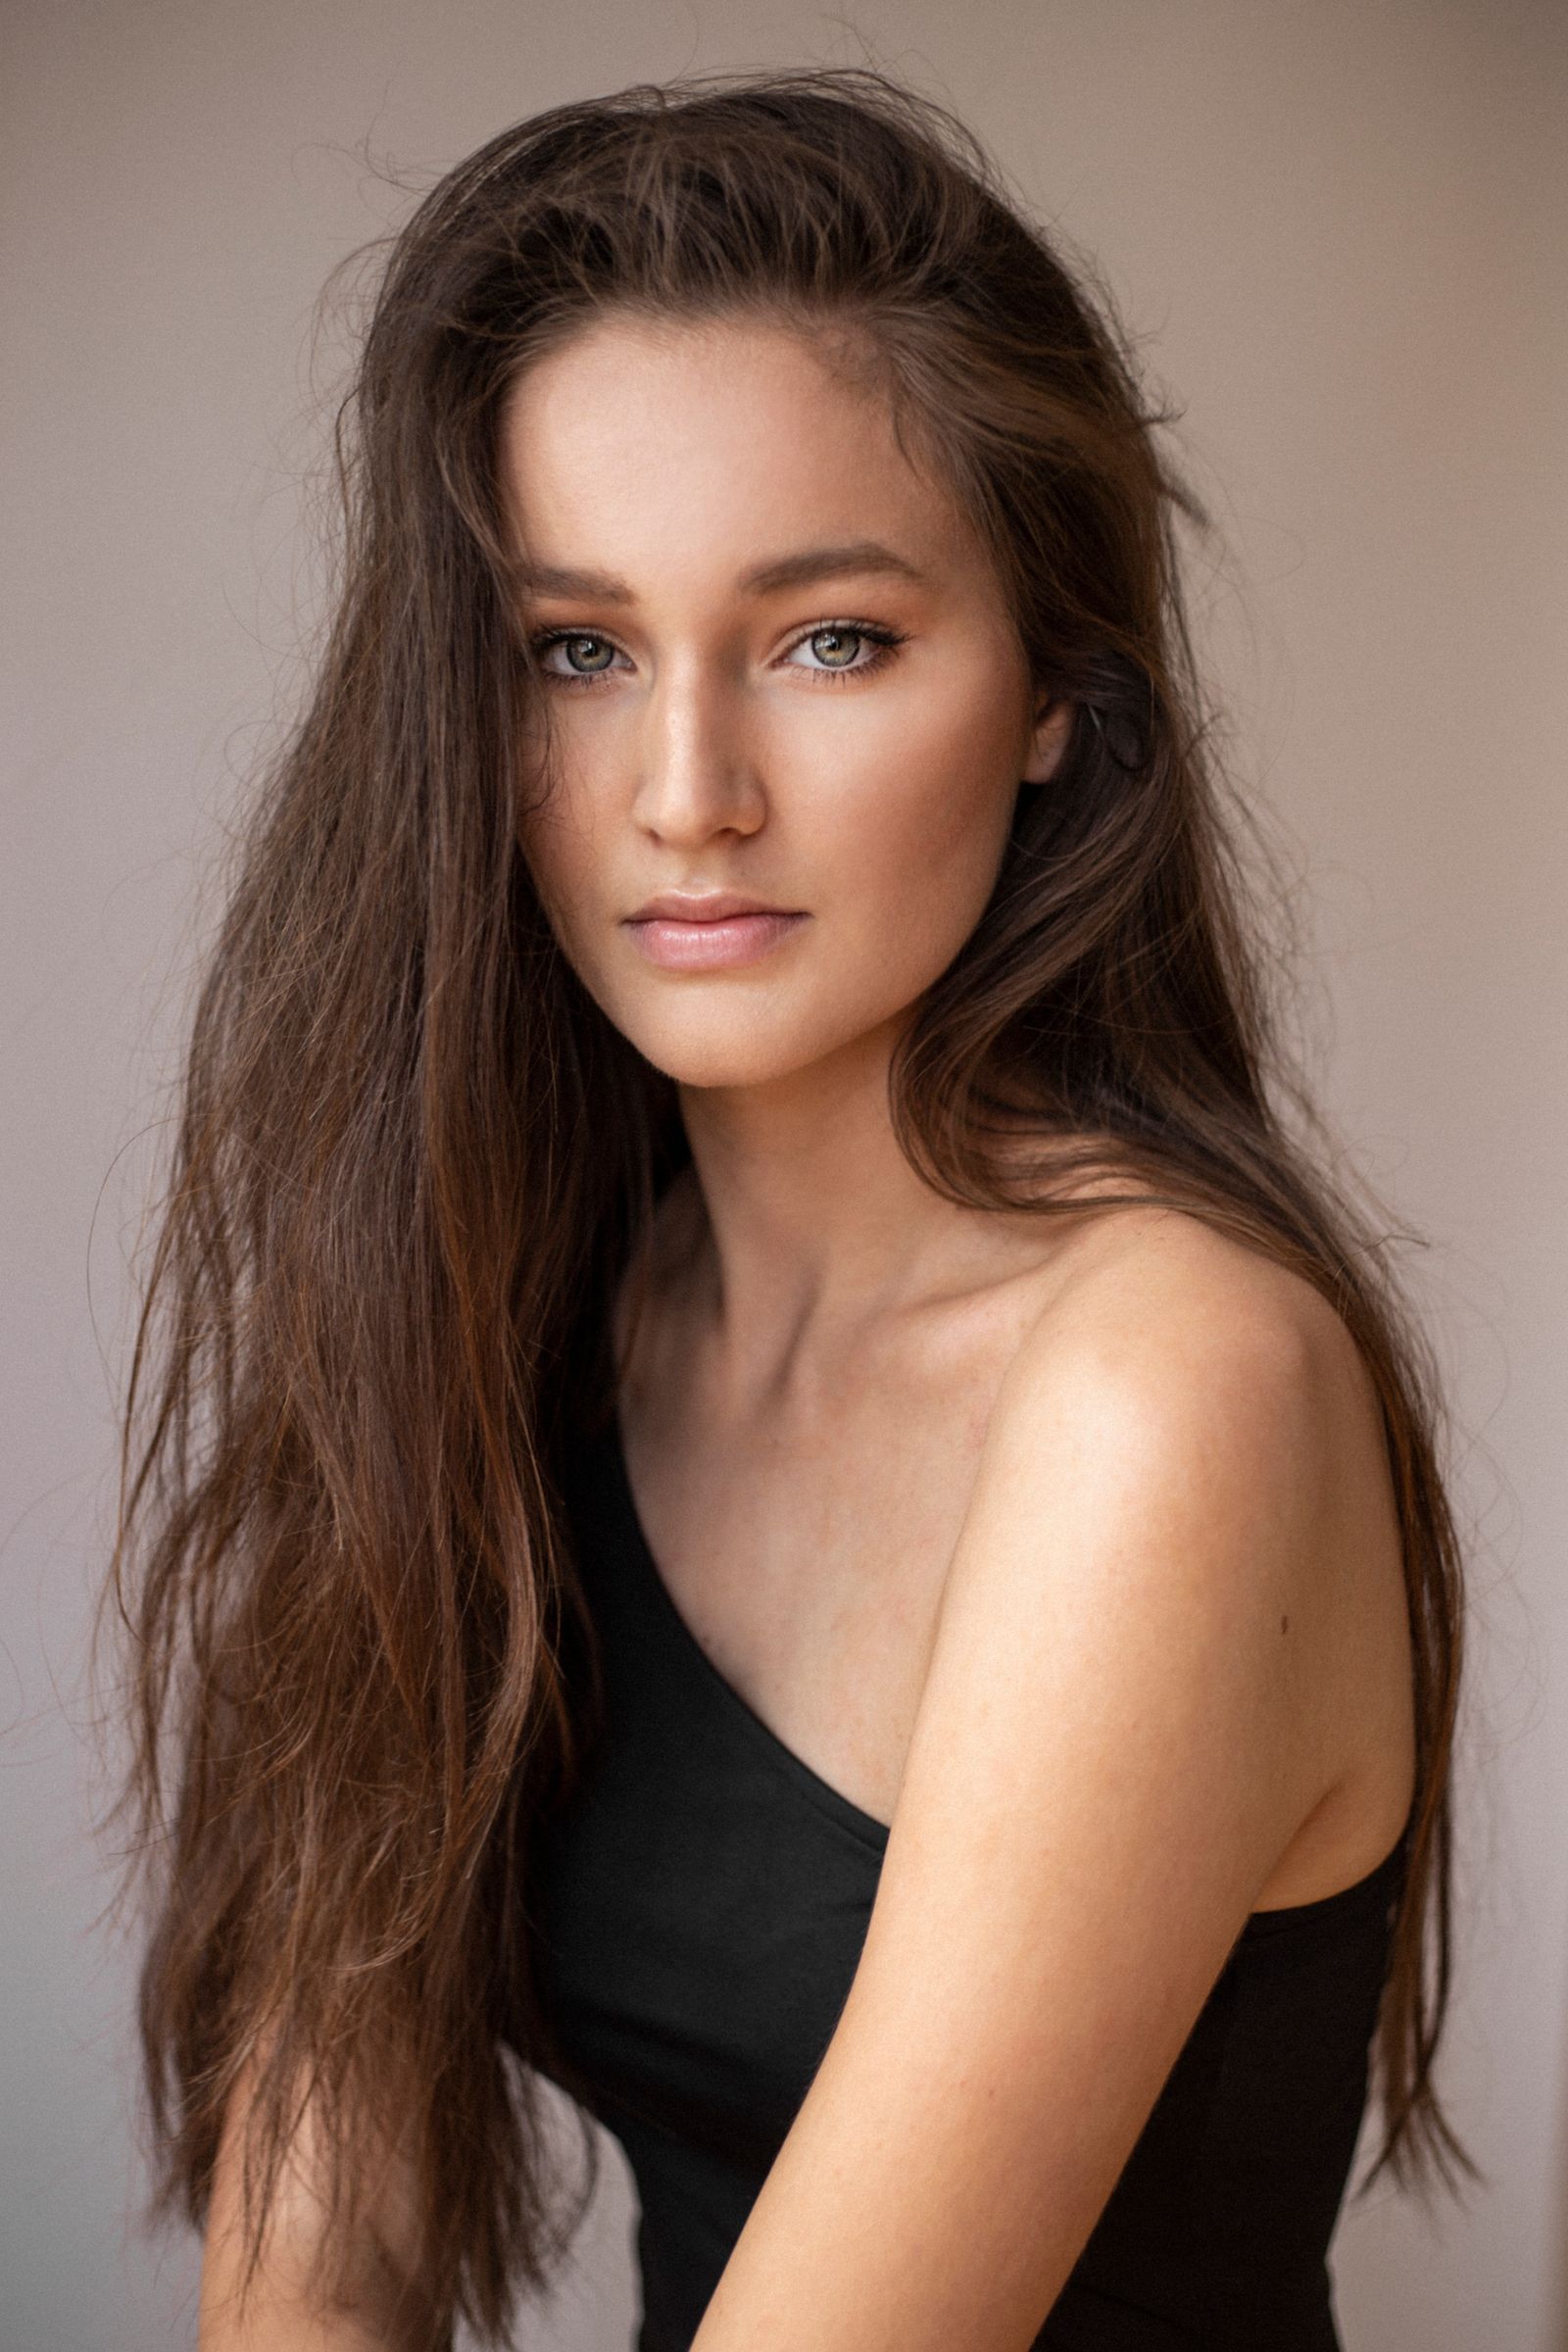 Alina - a model from Budapest, Hungary